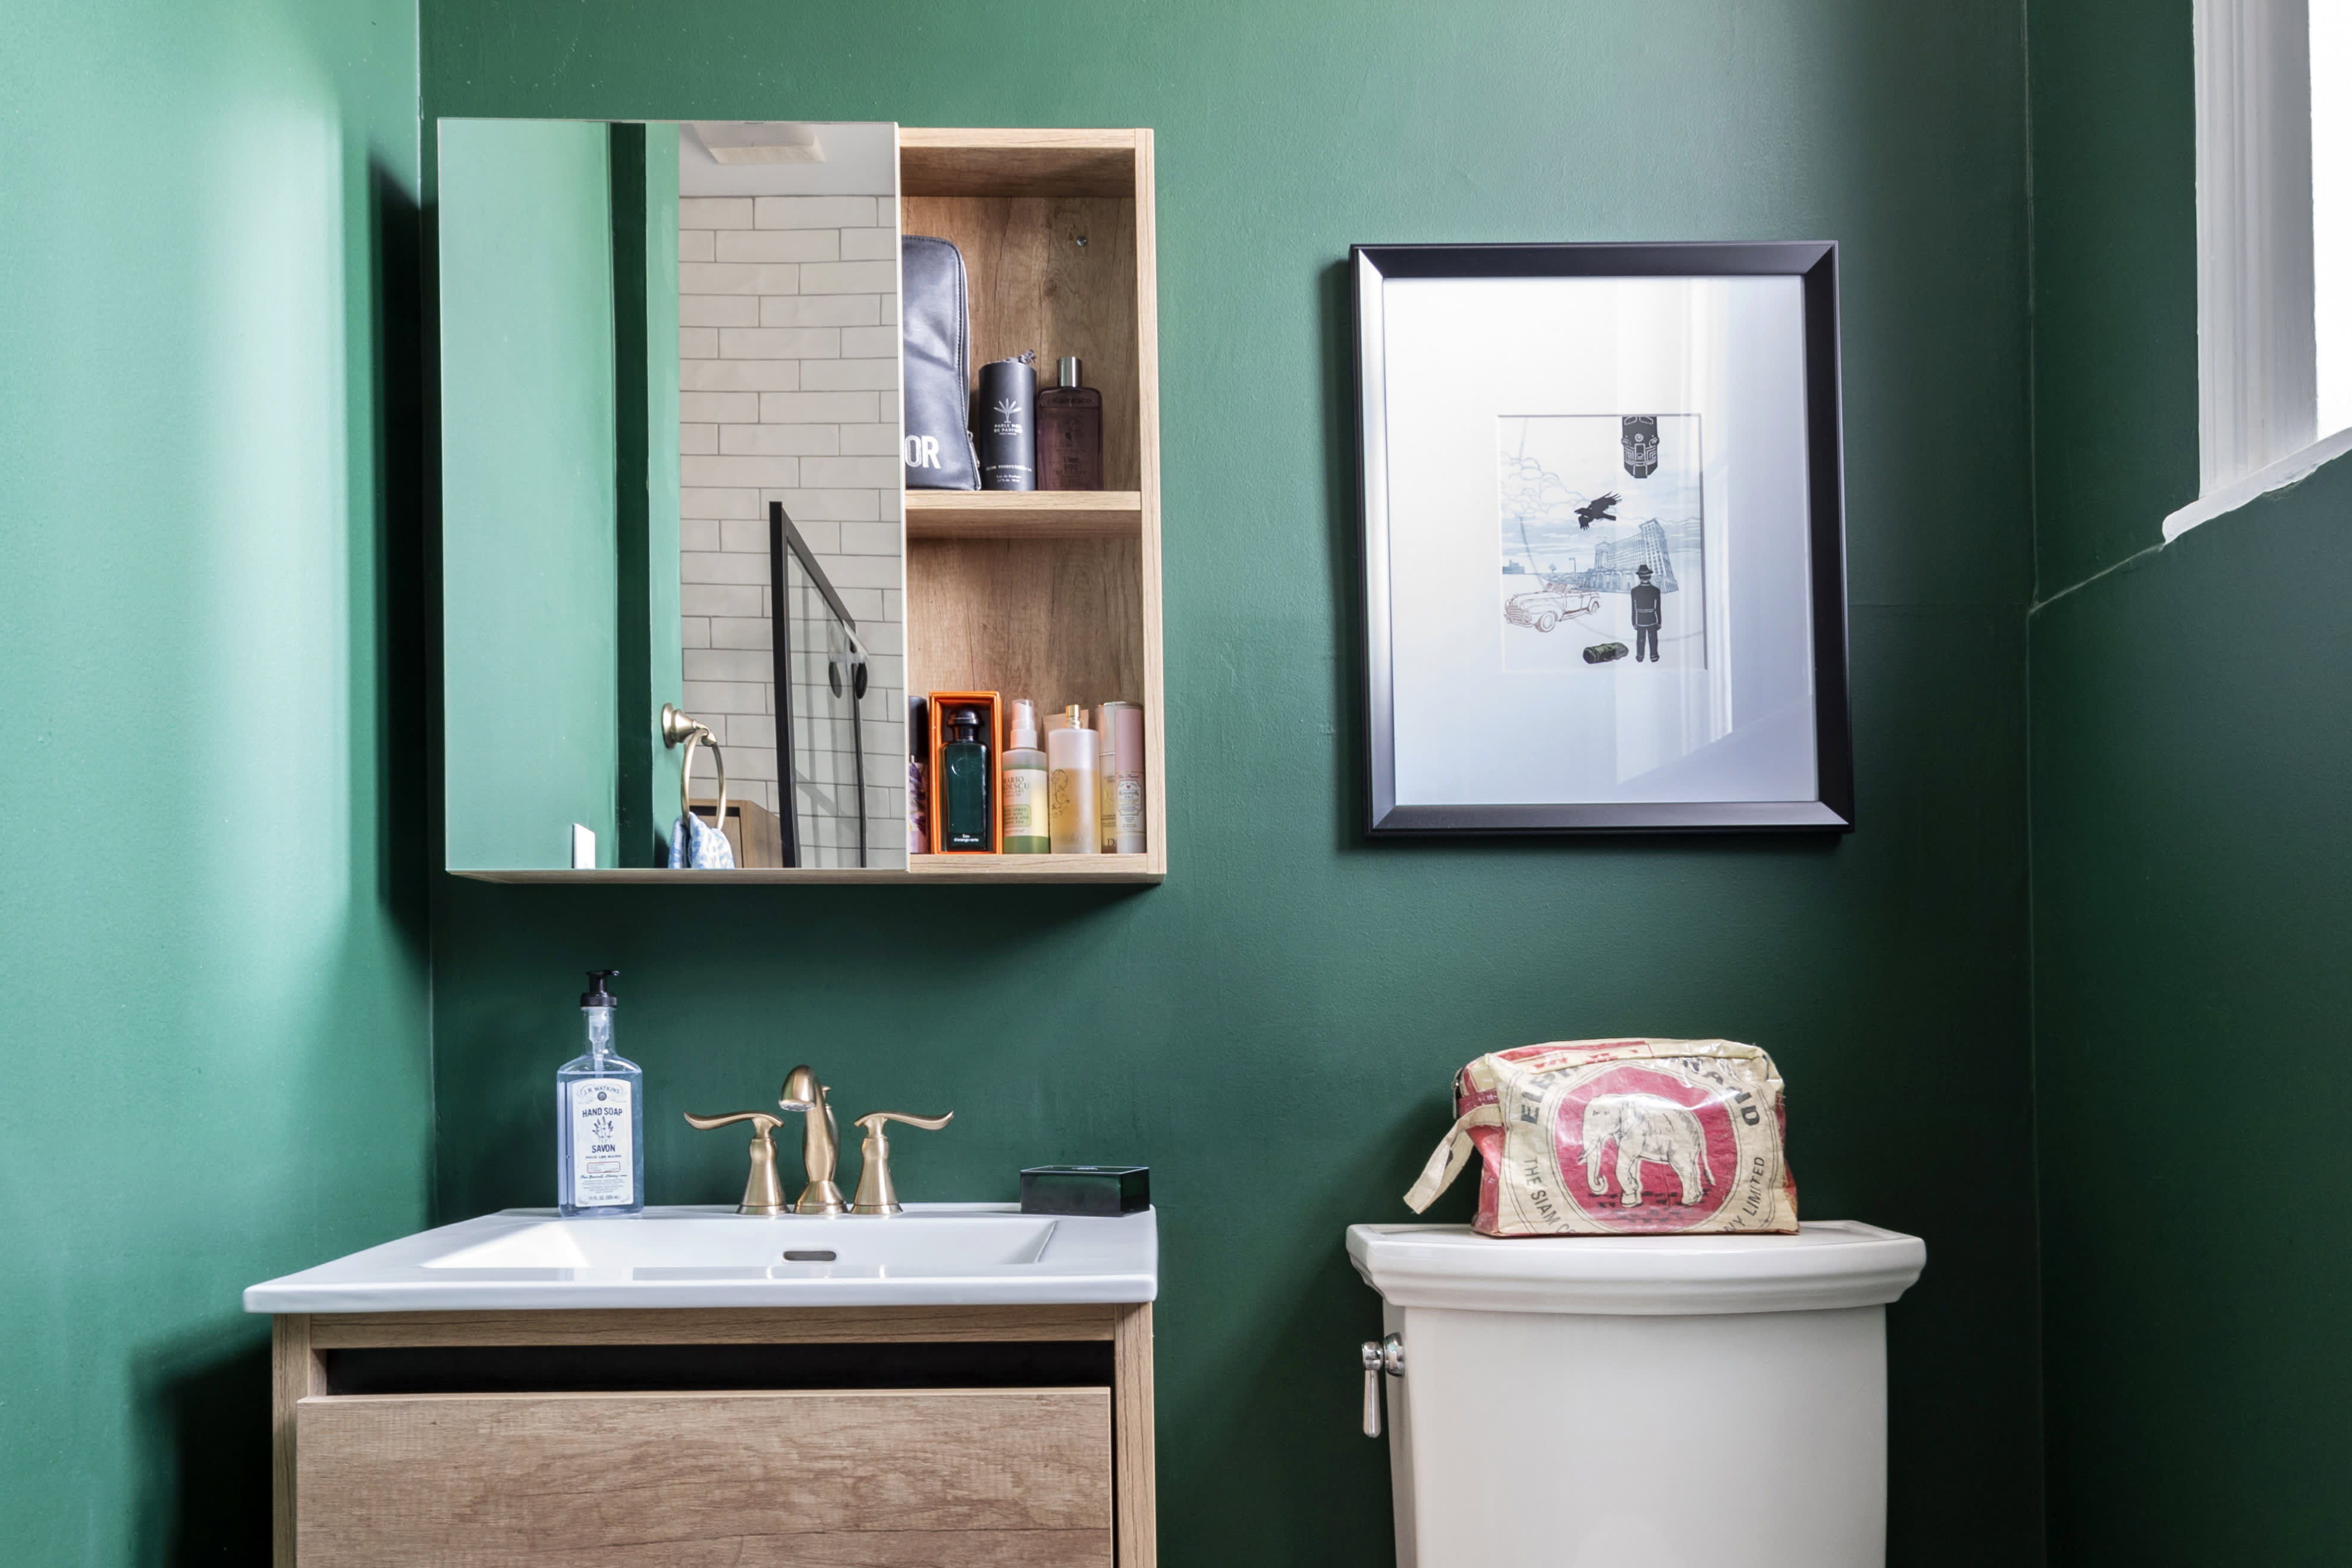 Textured Bathroom Wall Ideas: 10 Imaginative Treatments